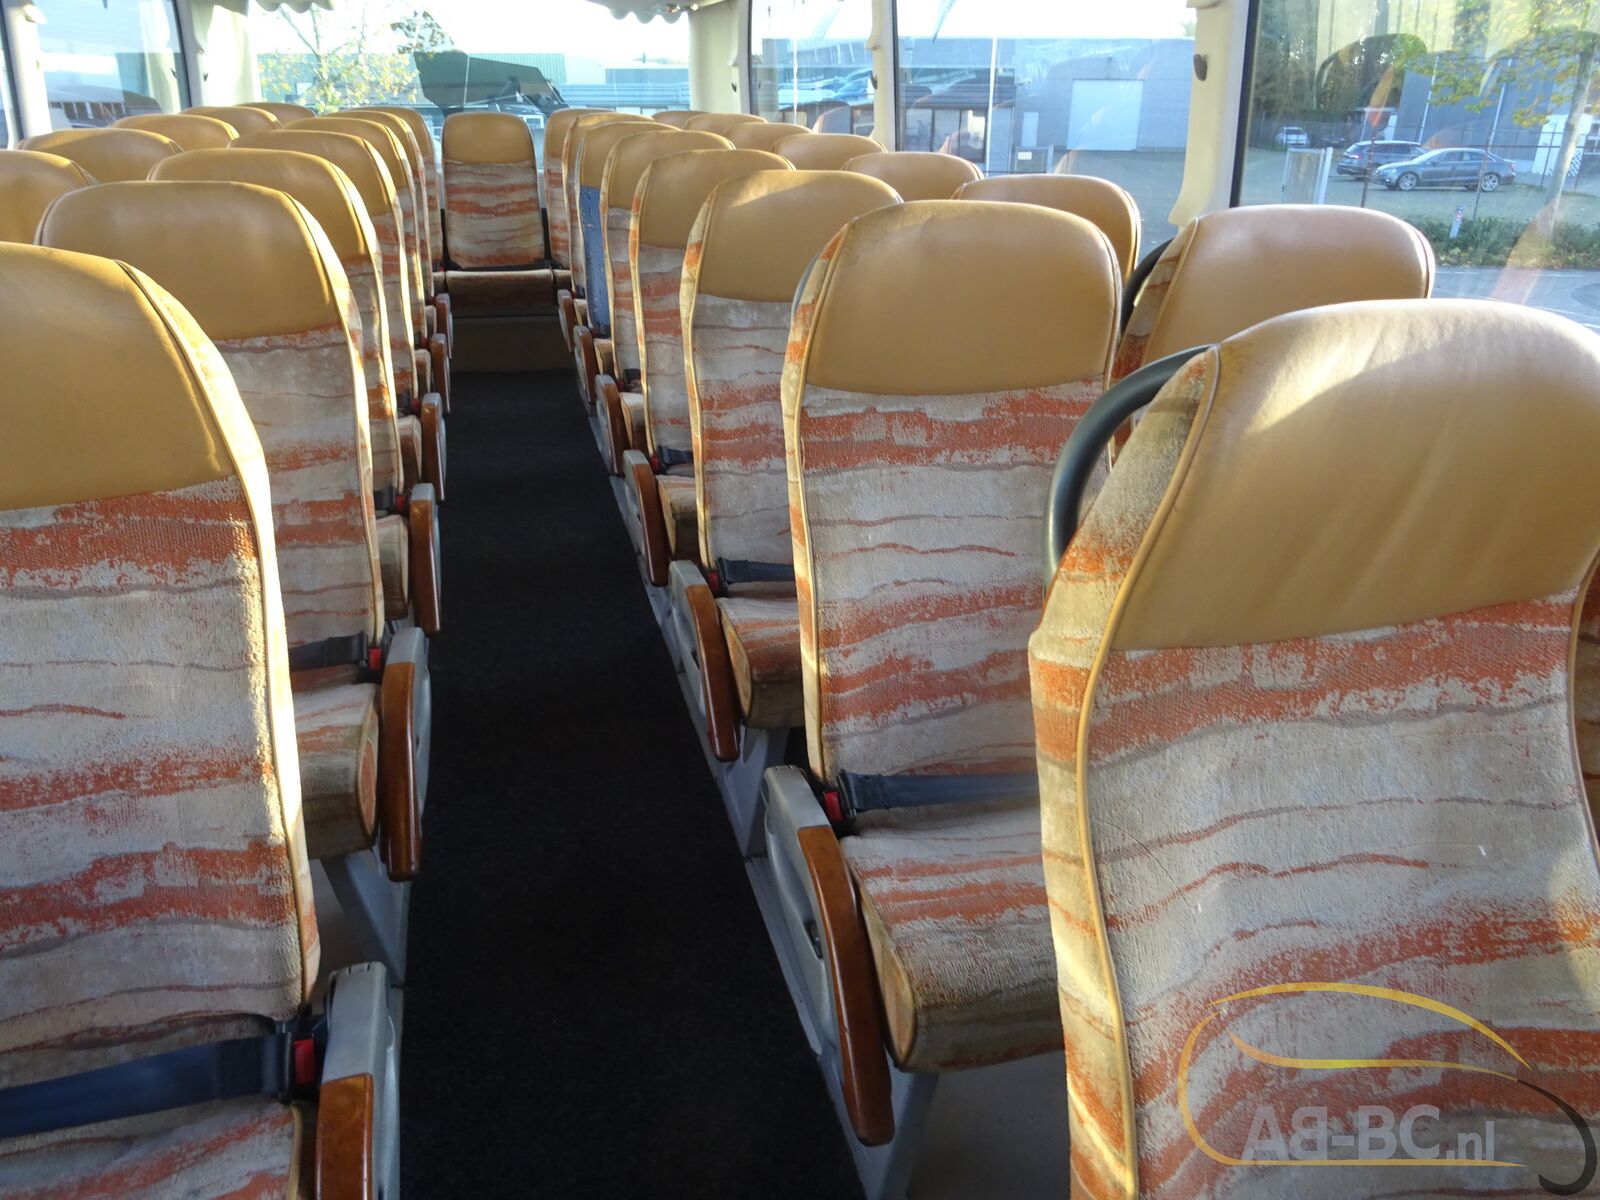 coach-bus-MAN-R08-Lions-Coach-Supreme-61-Seats---1669192233745567015_orig_5541a2c1cddeea058630066e6014989c--22112310185426922000